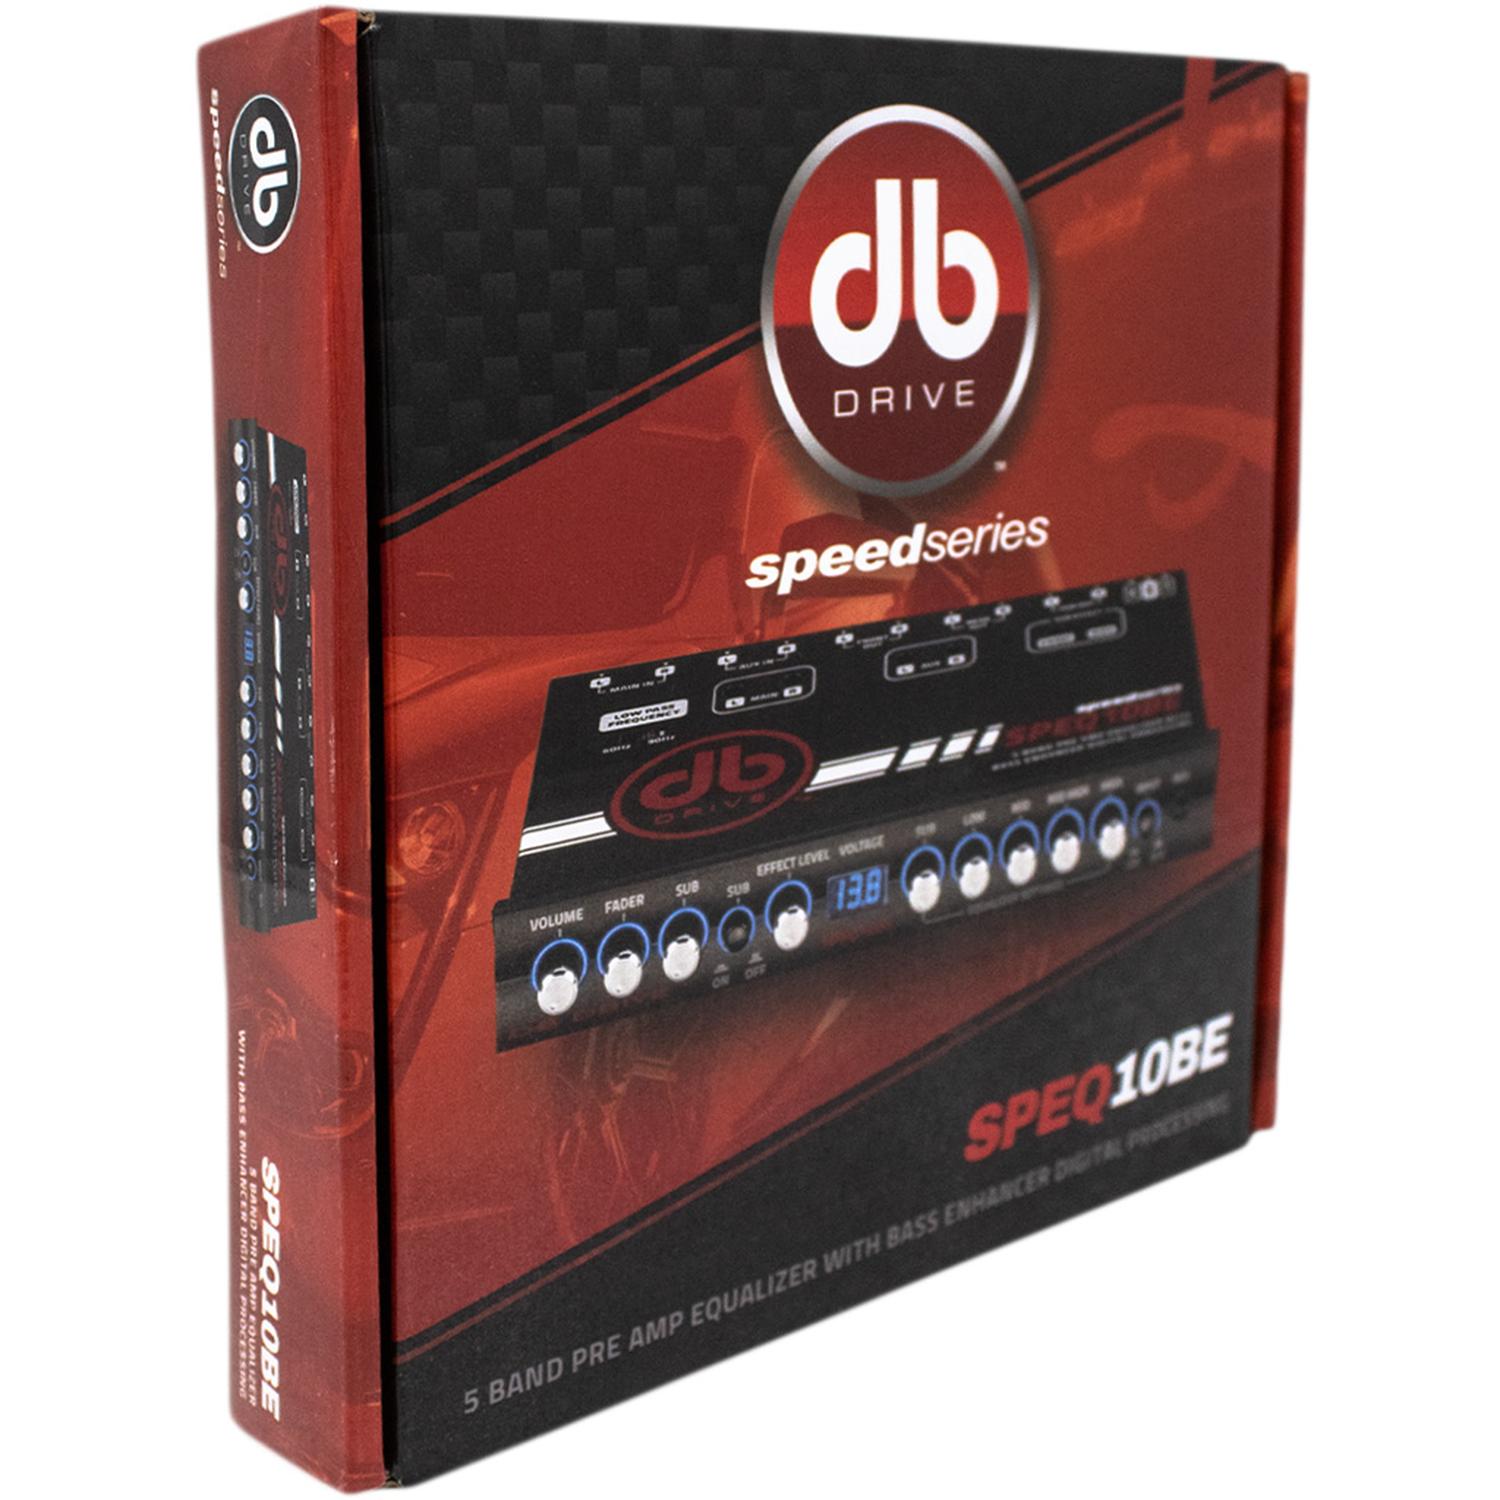 Ecualizador Con Restaurador de Bajos DB Drive SPEQ10BE 5 Bandas - Audioshop México lo mejor en Car Audio en México -  DB Drive